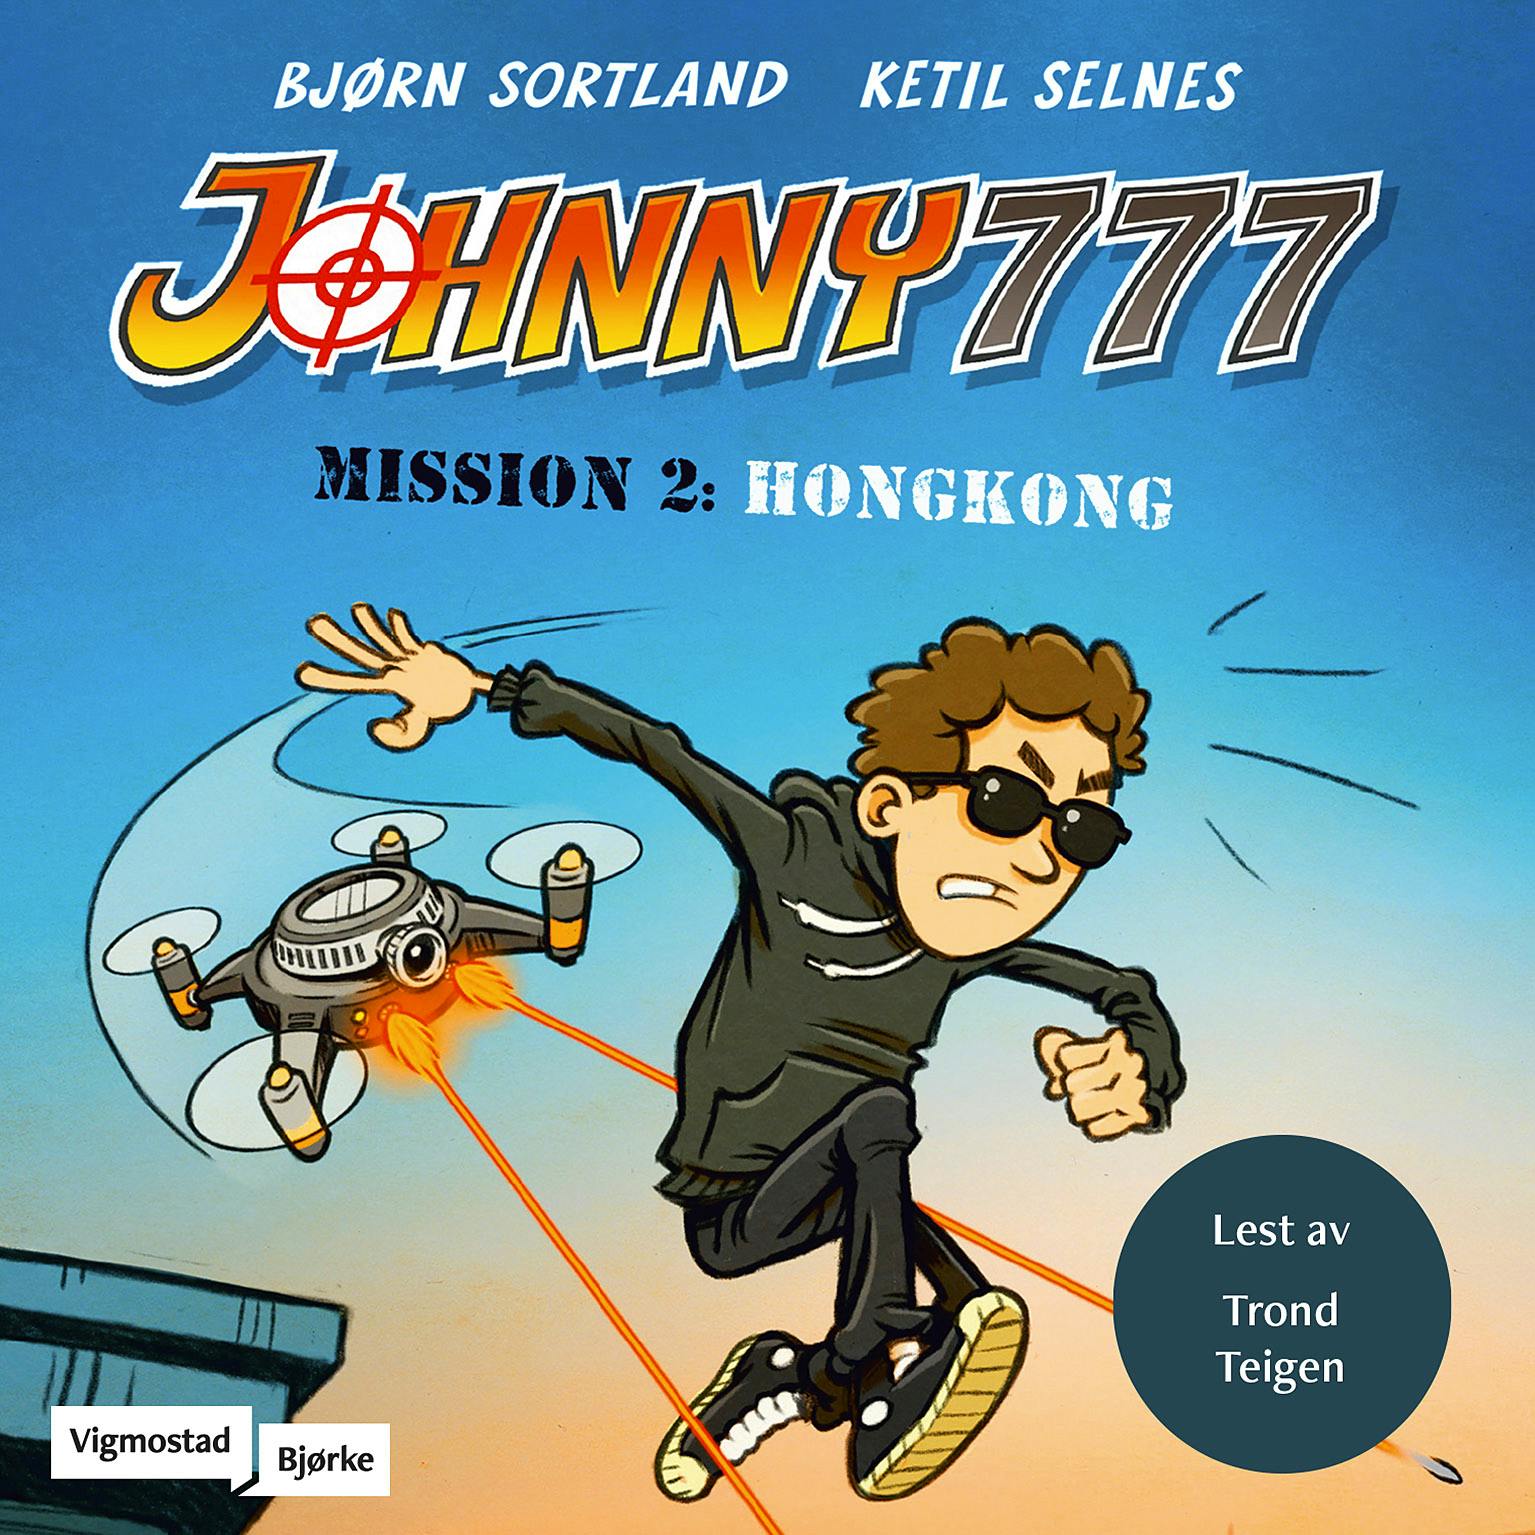 Mission 2: Hongkong - undefined